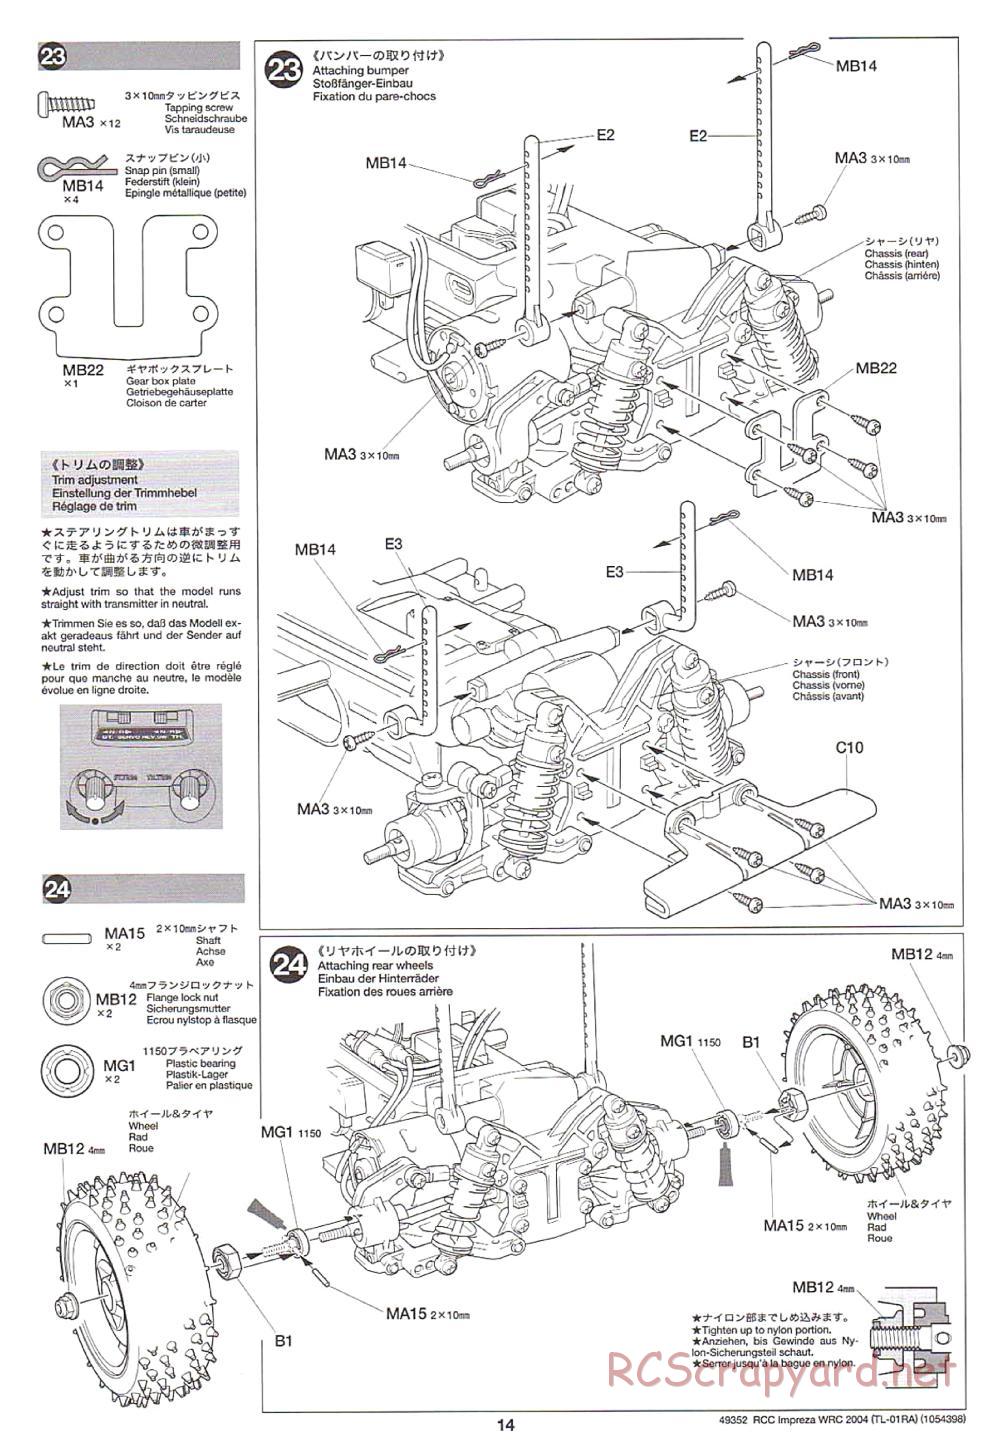 Tamiya - Subaru Impreza WRC 2004 Chassis - Manual - Page 14